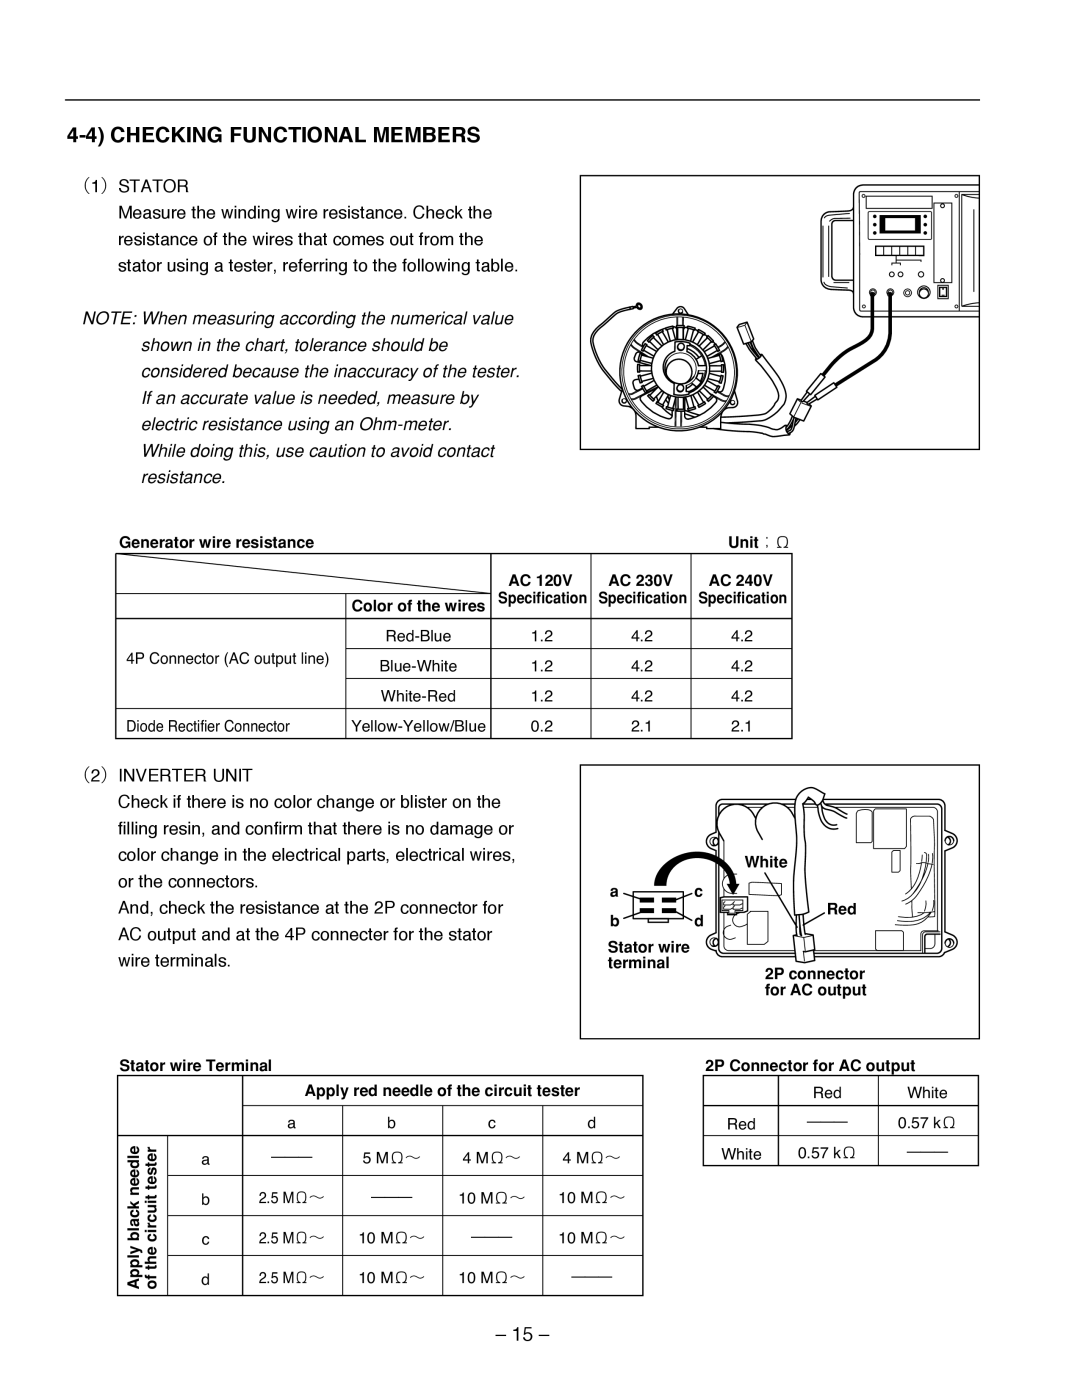 Subaru Robin Power Products R1700i service manual 4-4CHECKING FUNCTIONAL MEMBERS 